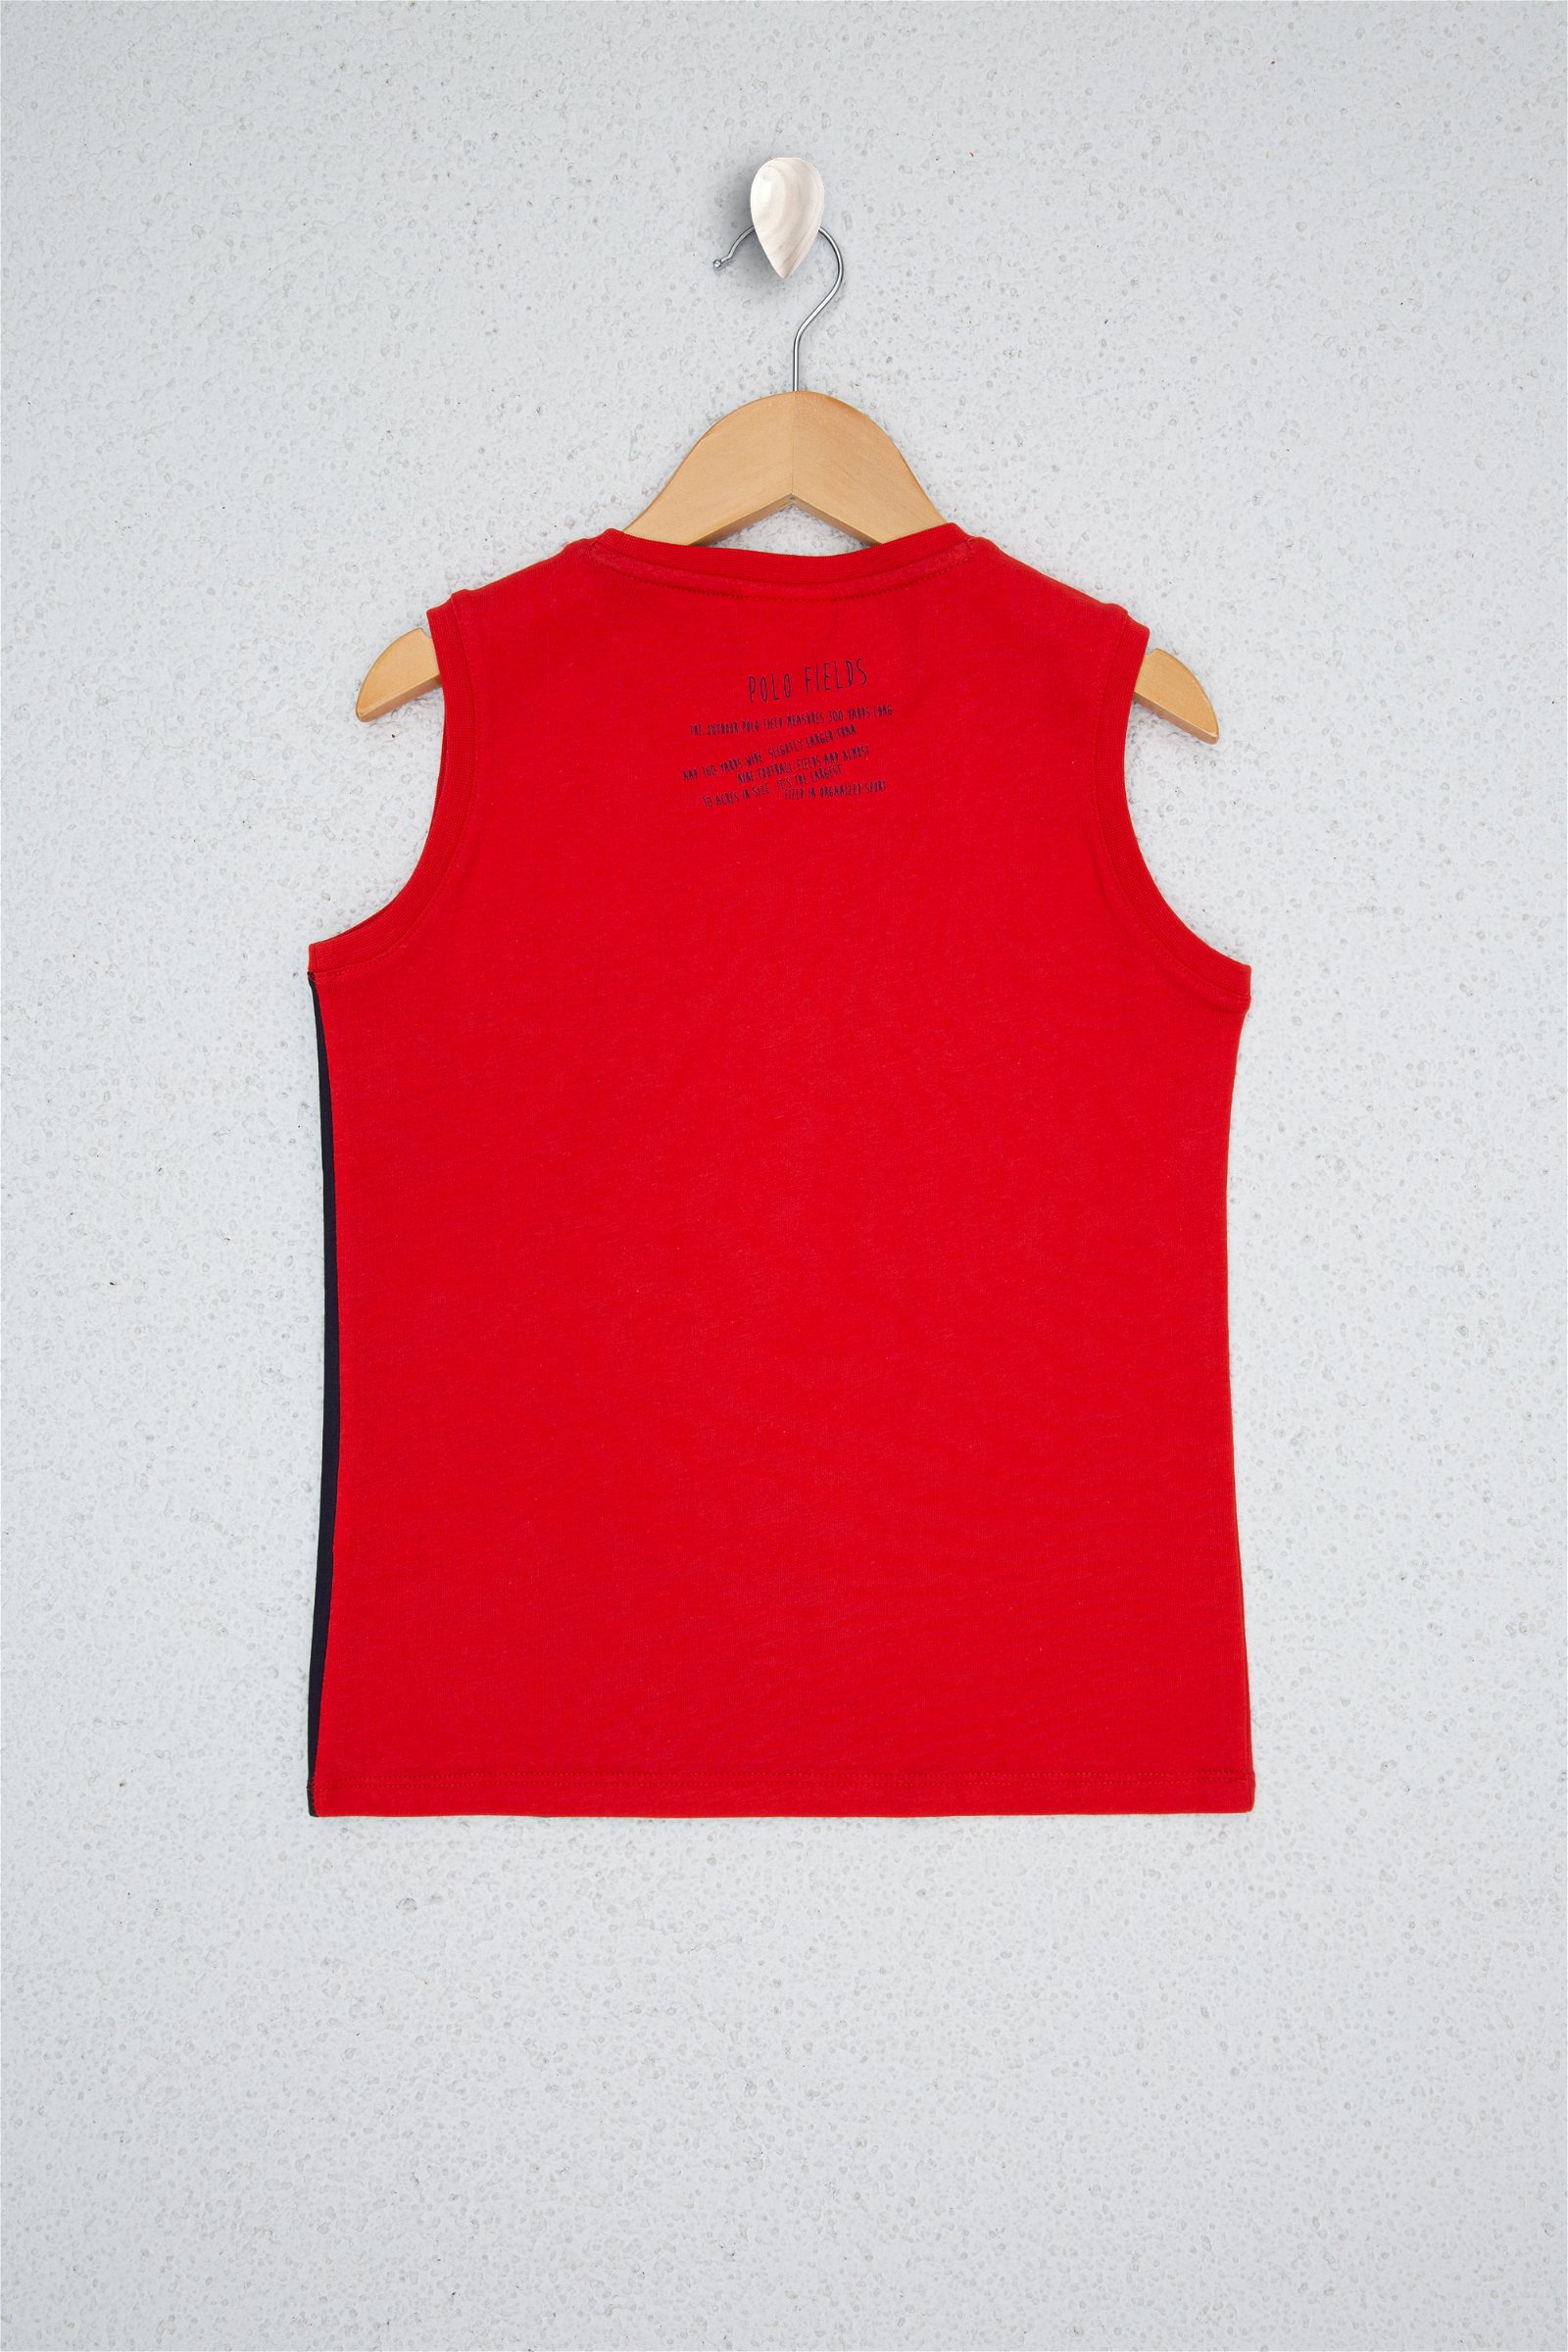 تی شرت  قرمز روشن  استاندارد فیت  پسرانه یو اس پولو | US POLO ASSN